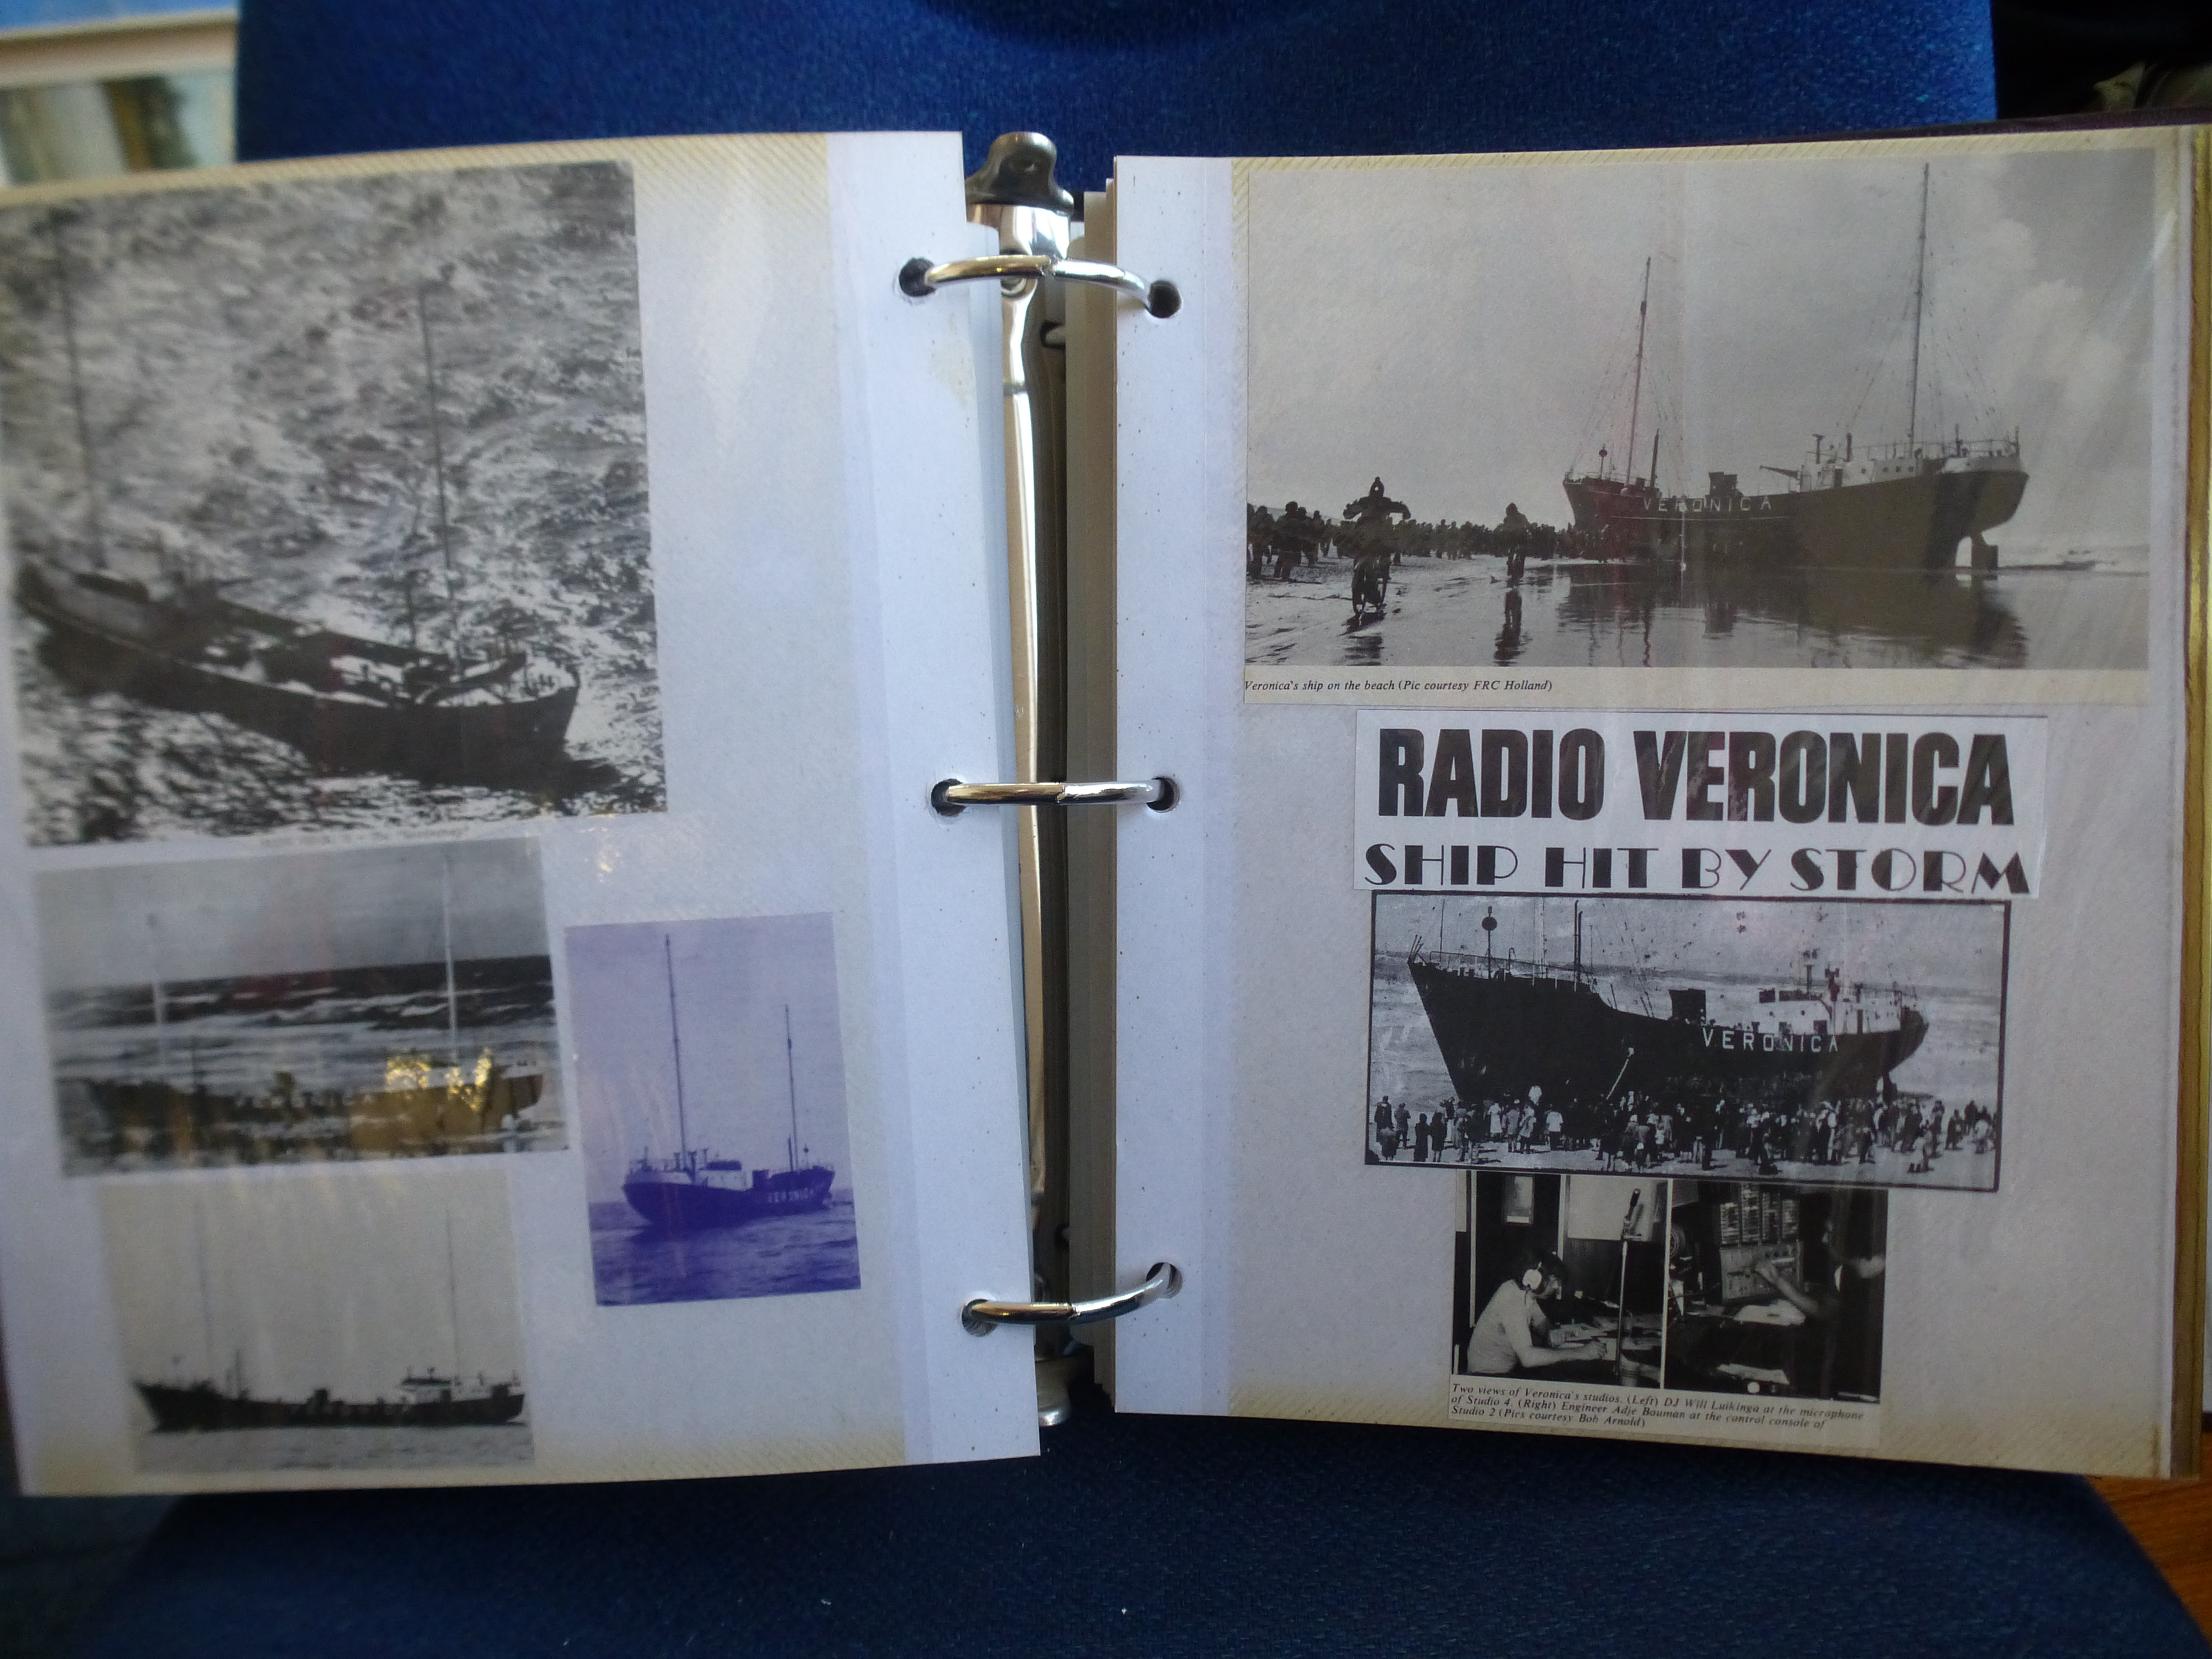 PIRATE RADIO PHOTOGRAPH ALBUM WITH PHOTOGRAPHS OF RADIO LONDON, DJS, RADIO VERONICA, SEALAND, - Image 34 of 51